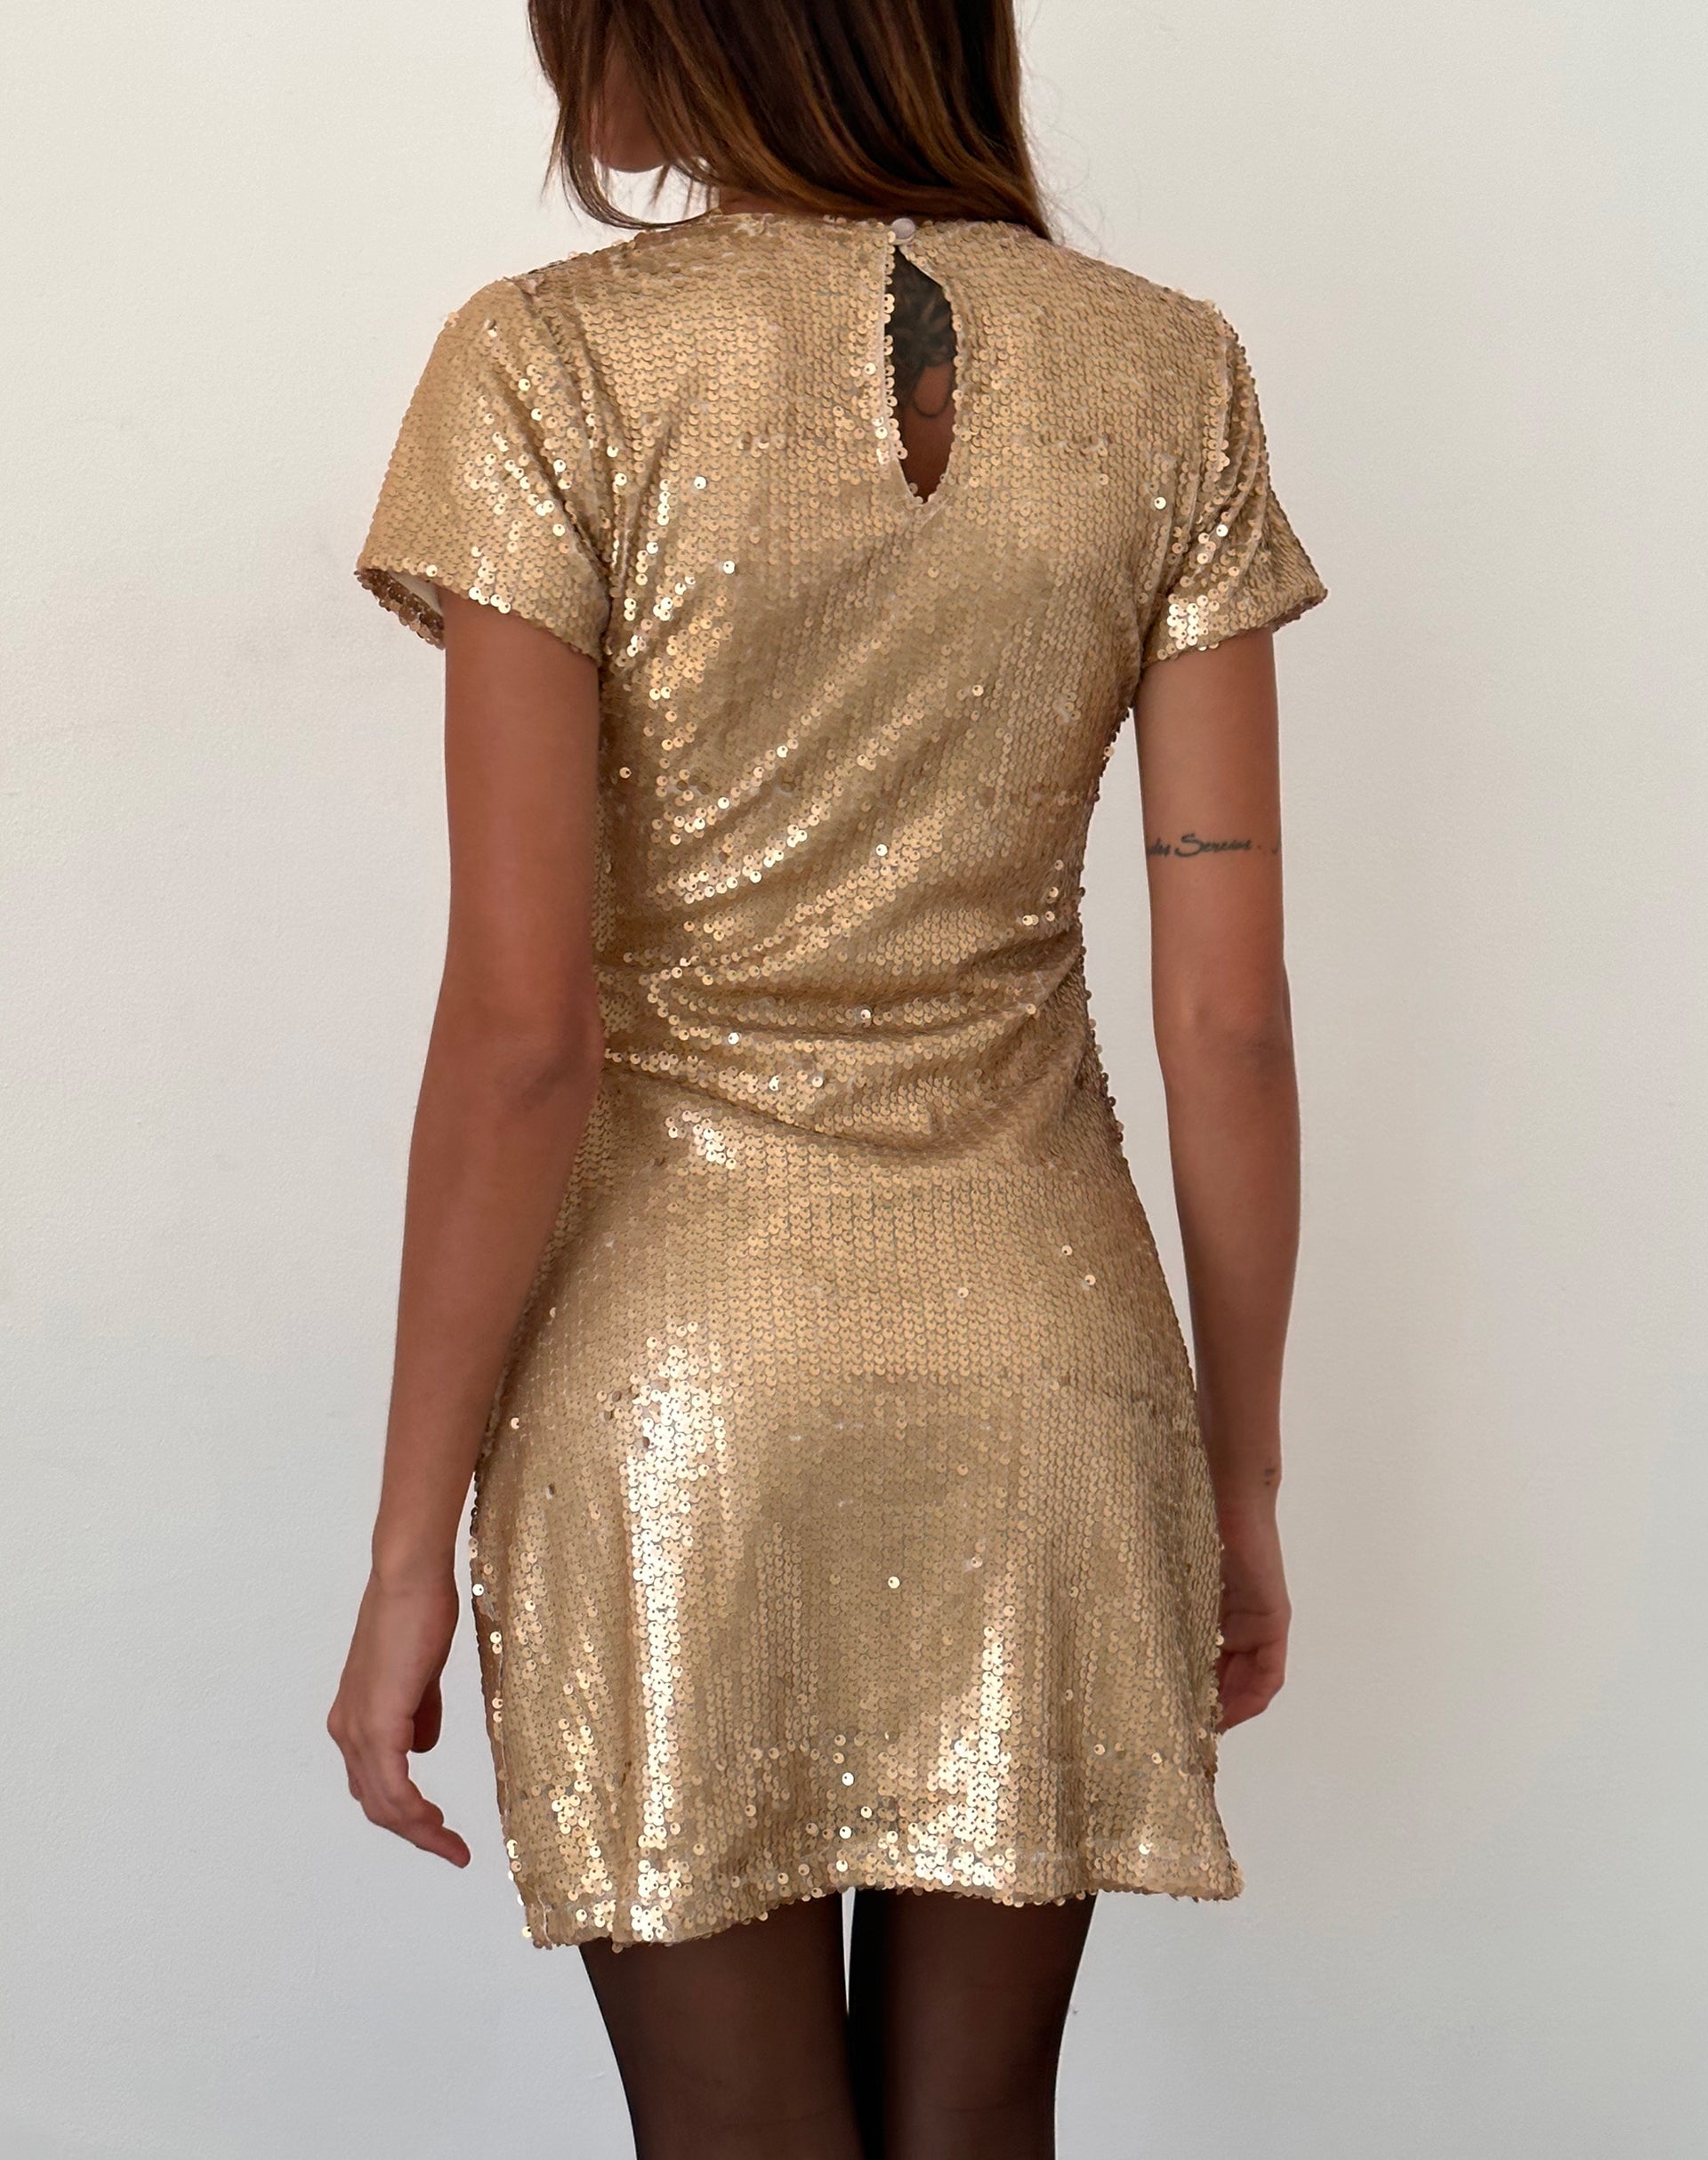 Image of Blythe Minikleid in Gold Pailletten